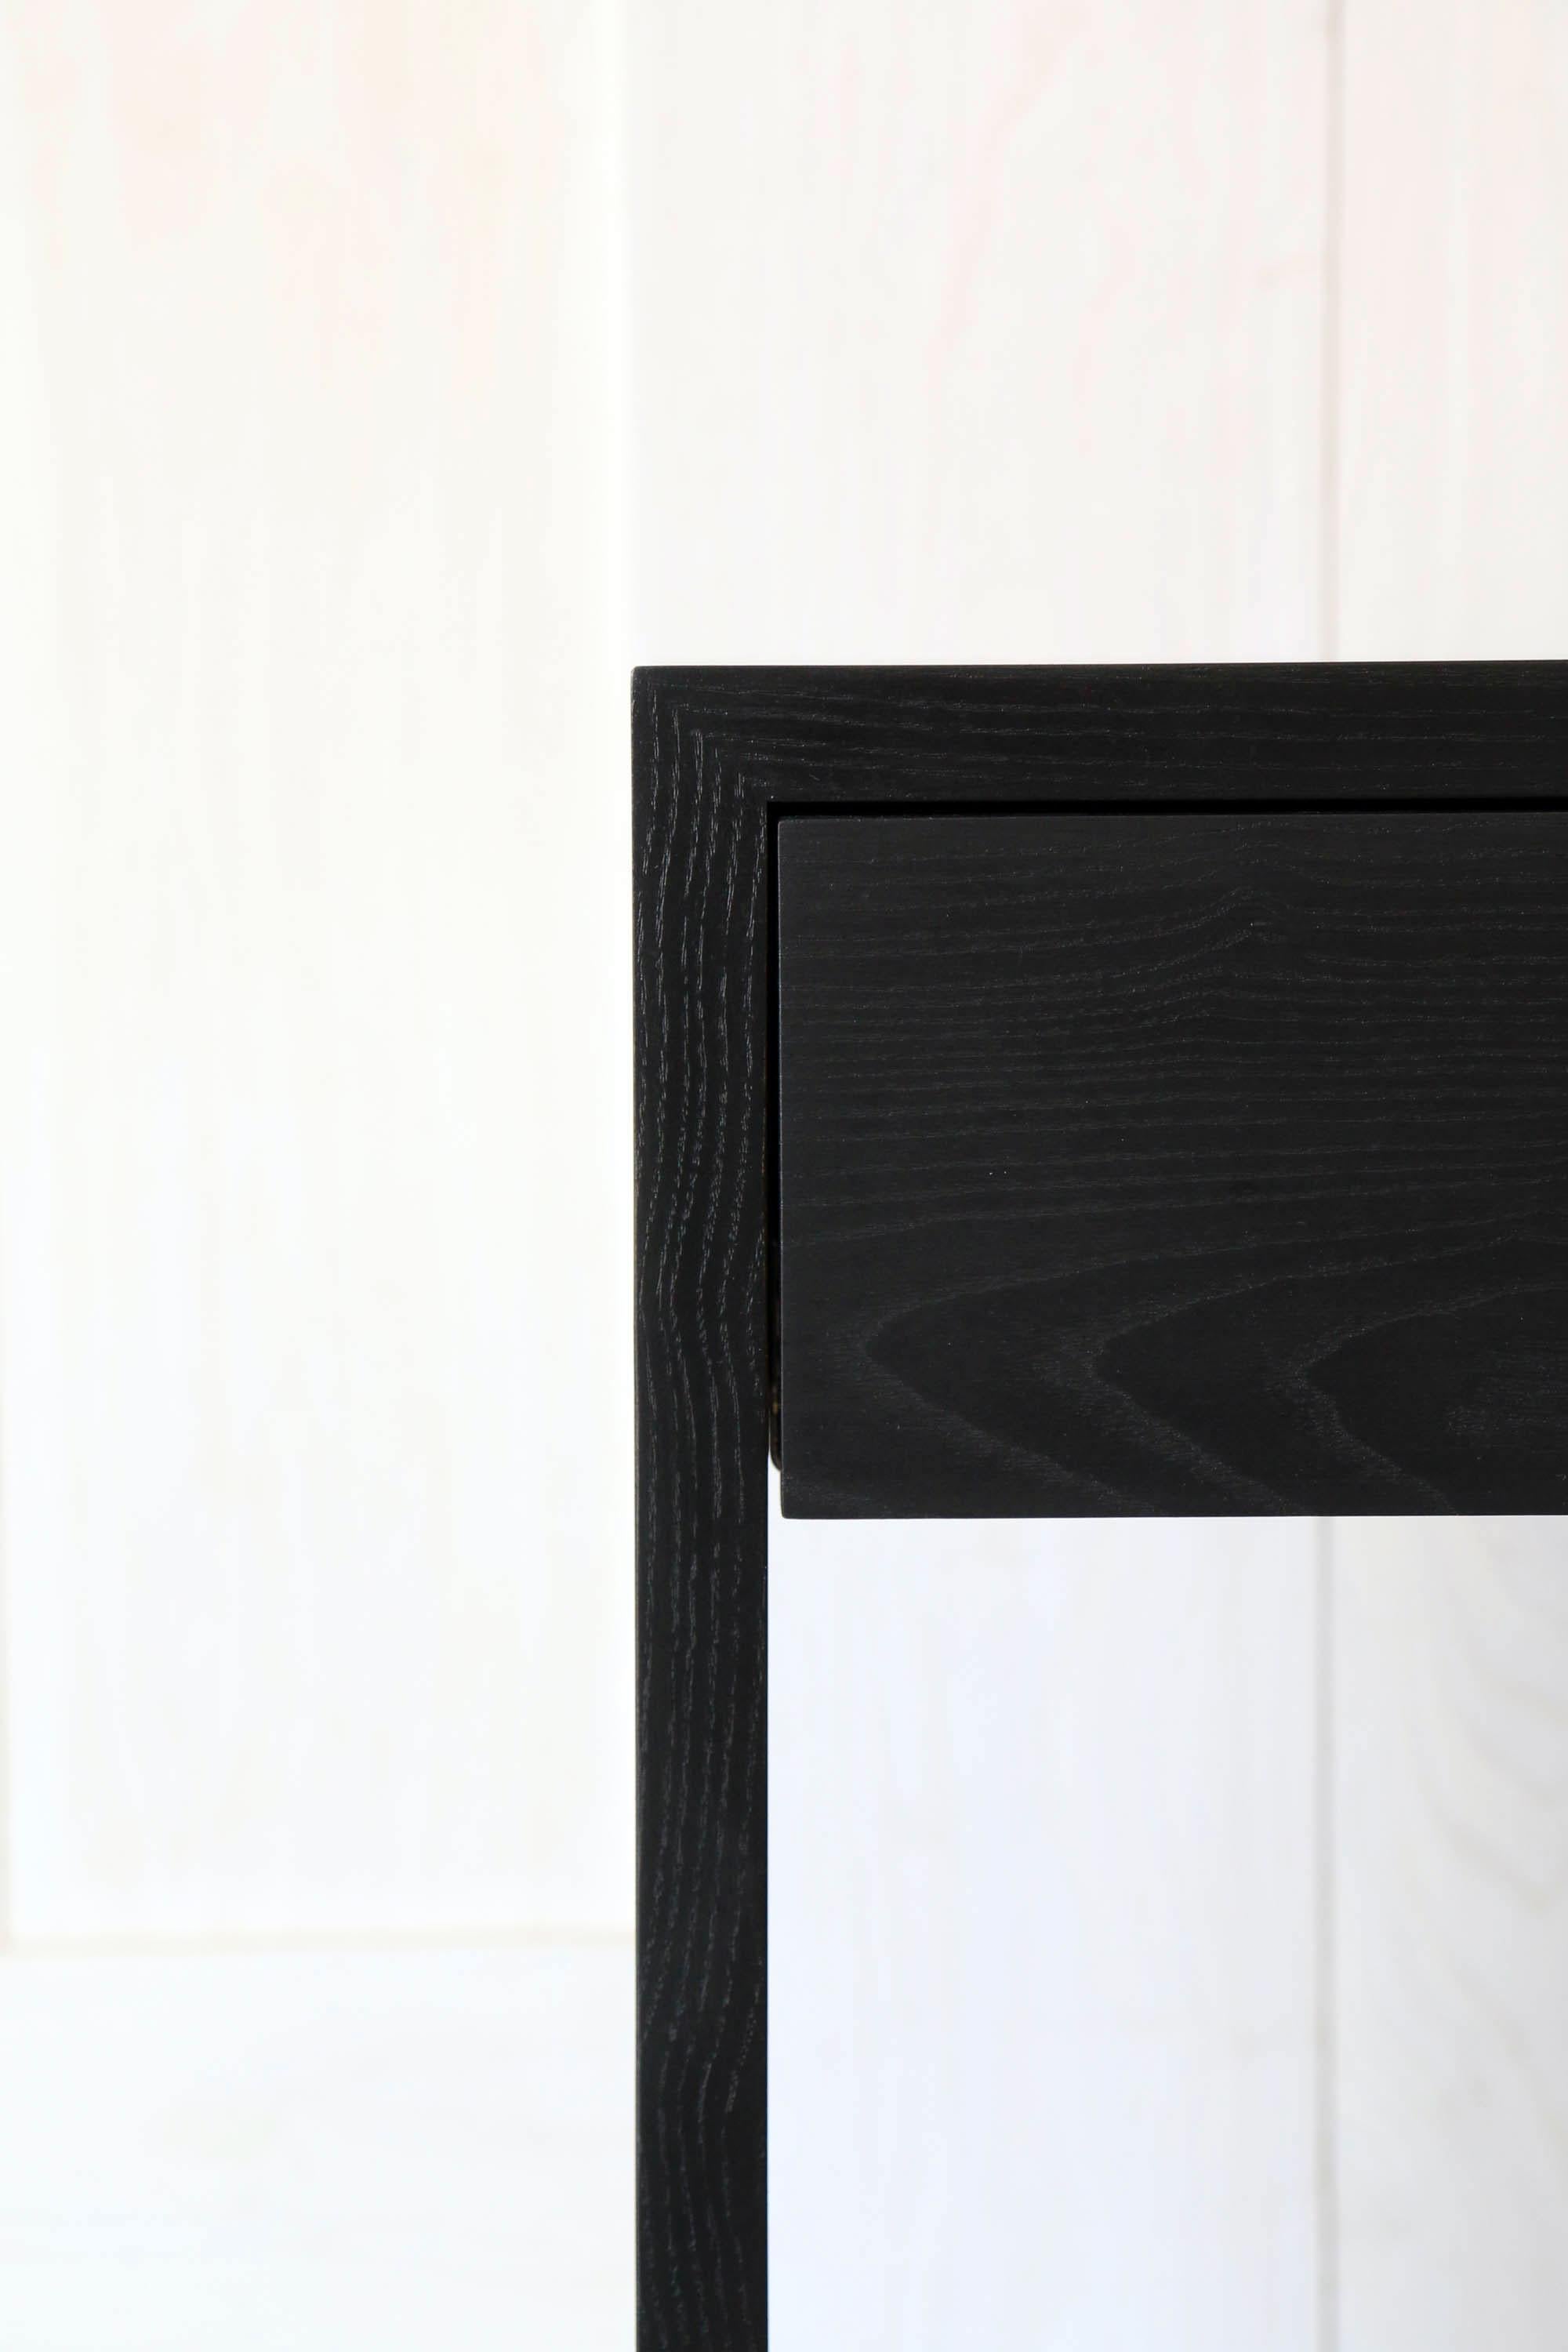 Modern Slim Wooden Bedside Cabinet with Drawer and Shelf For Sale